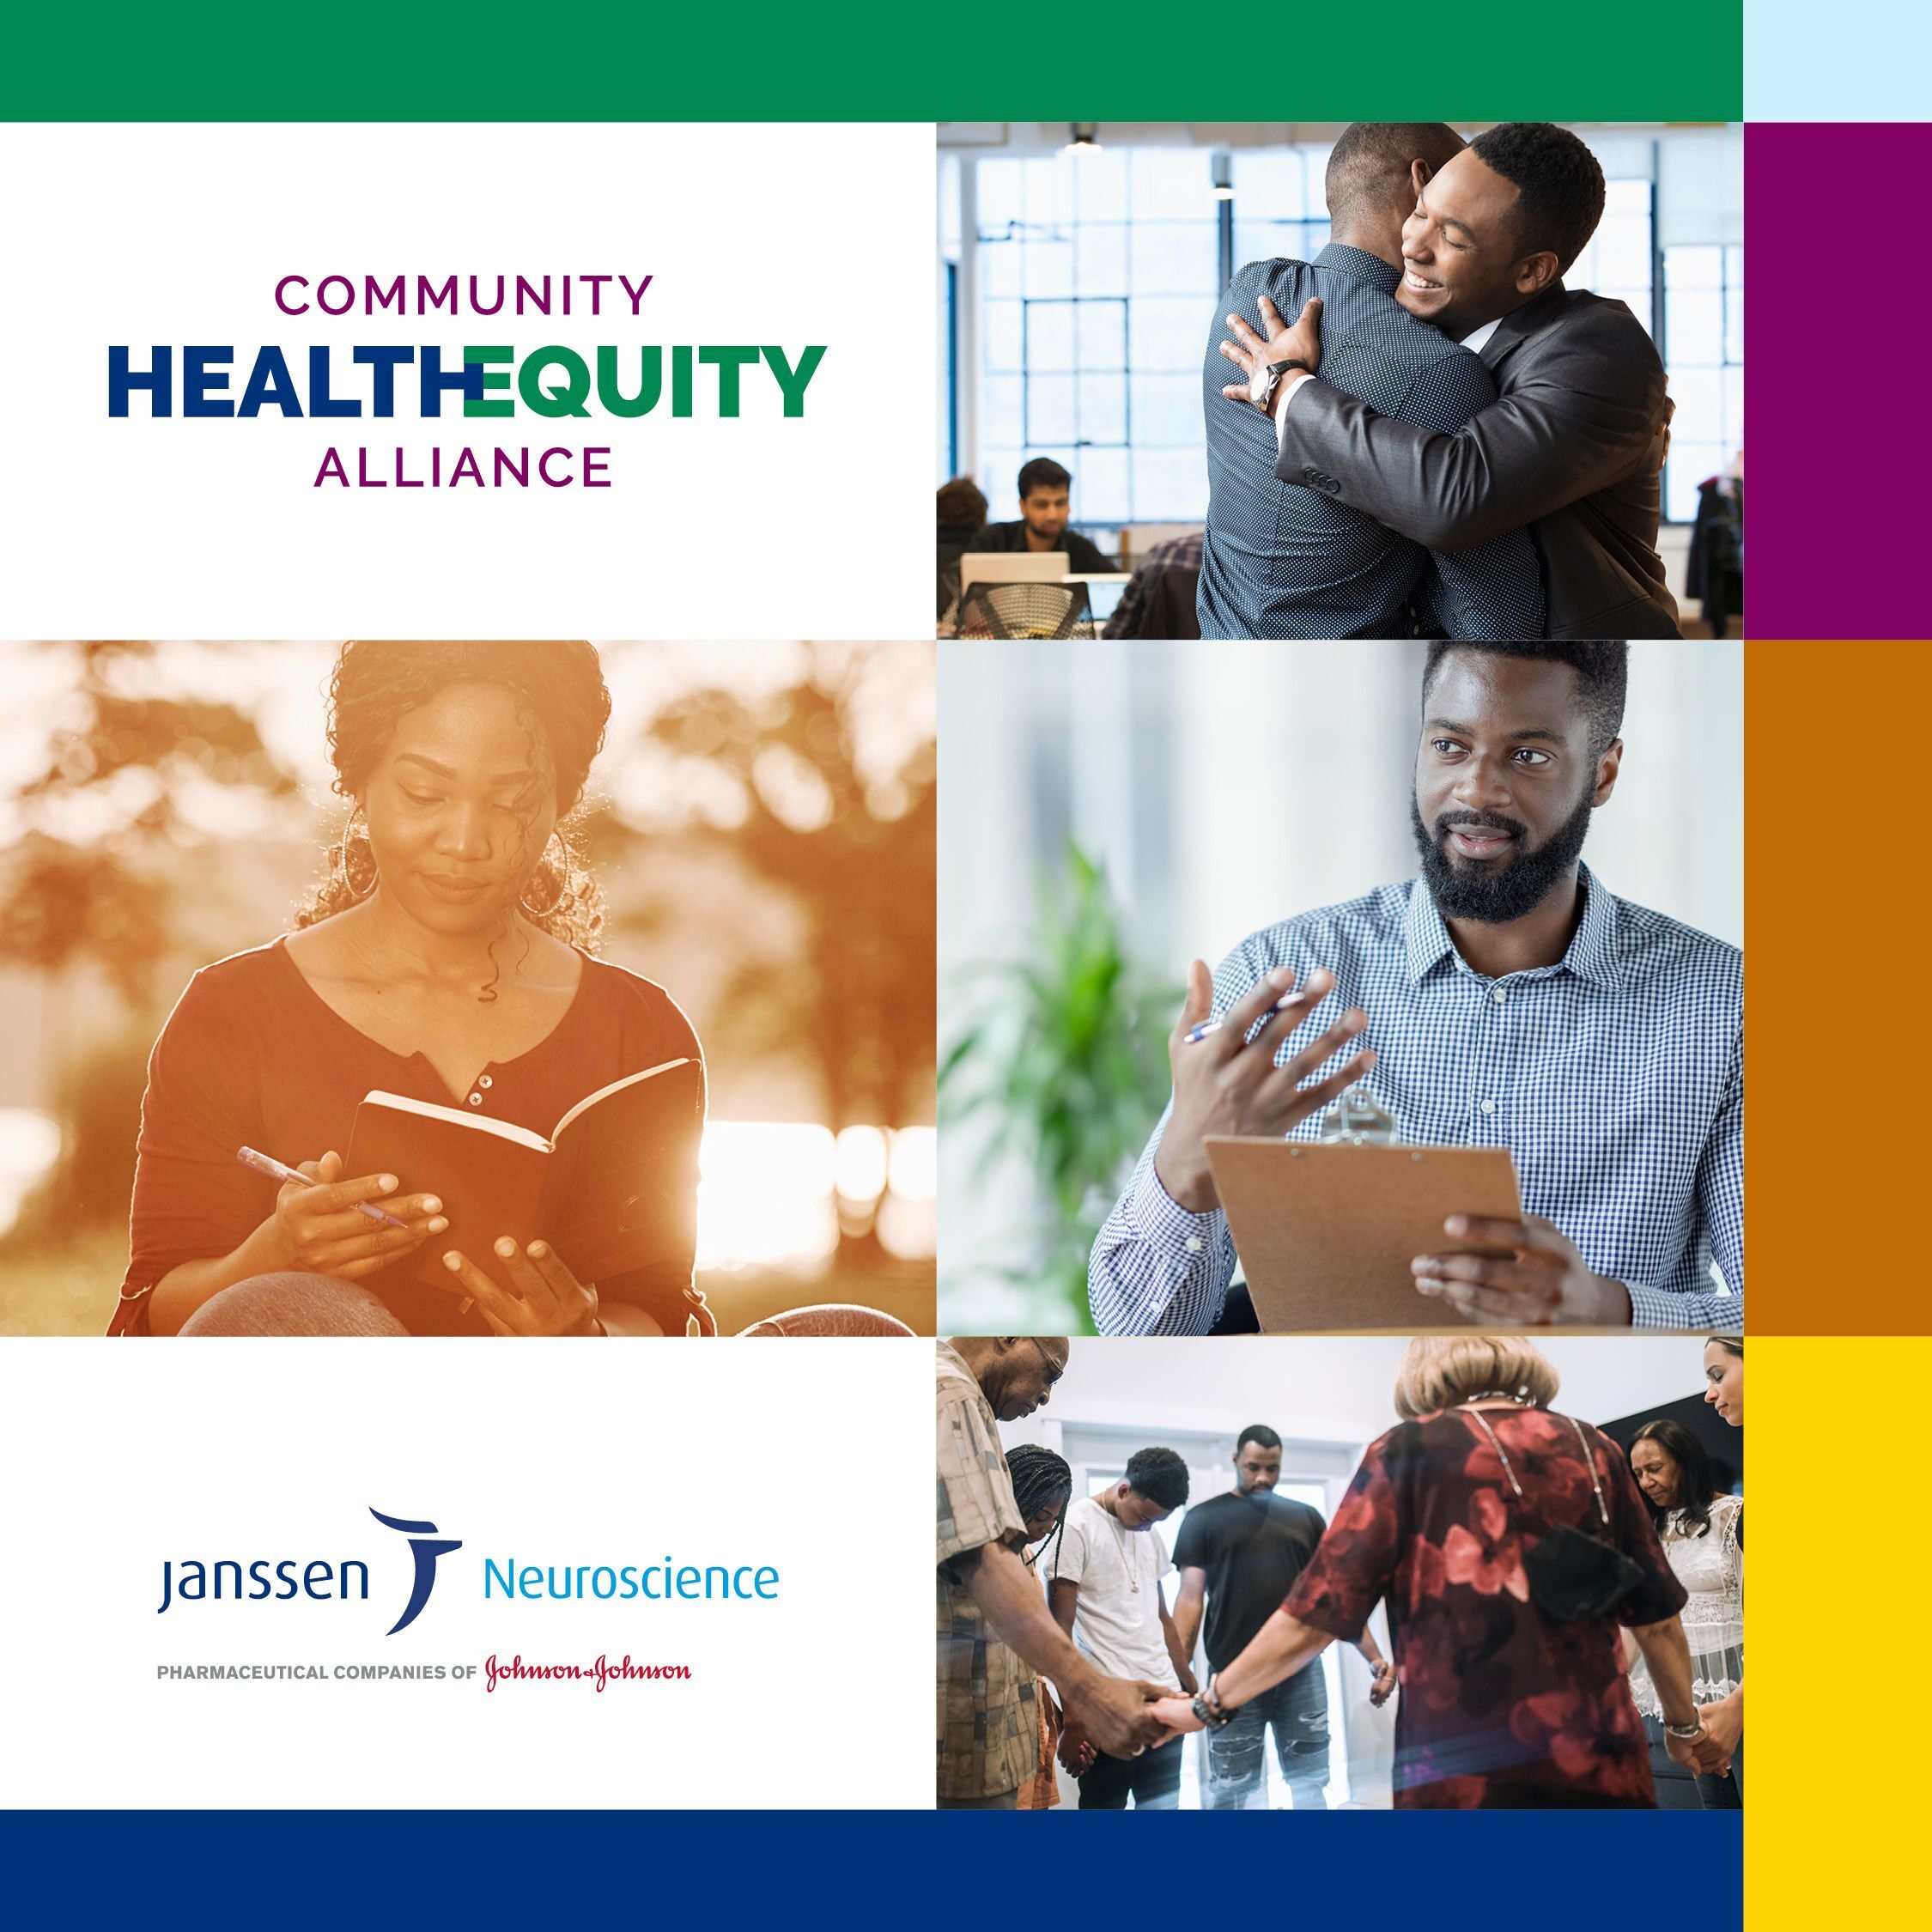 Community Health Equity Alliance in Georgia